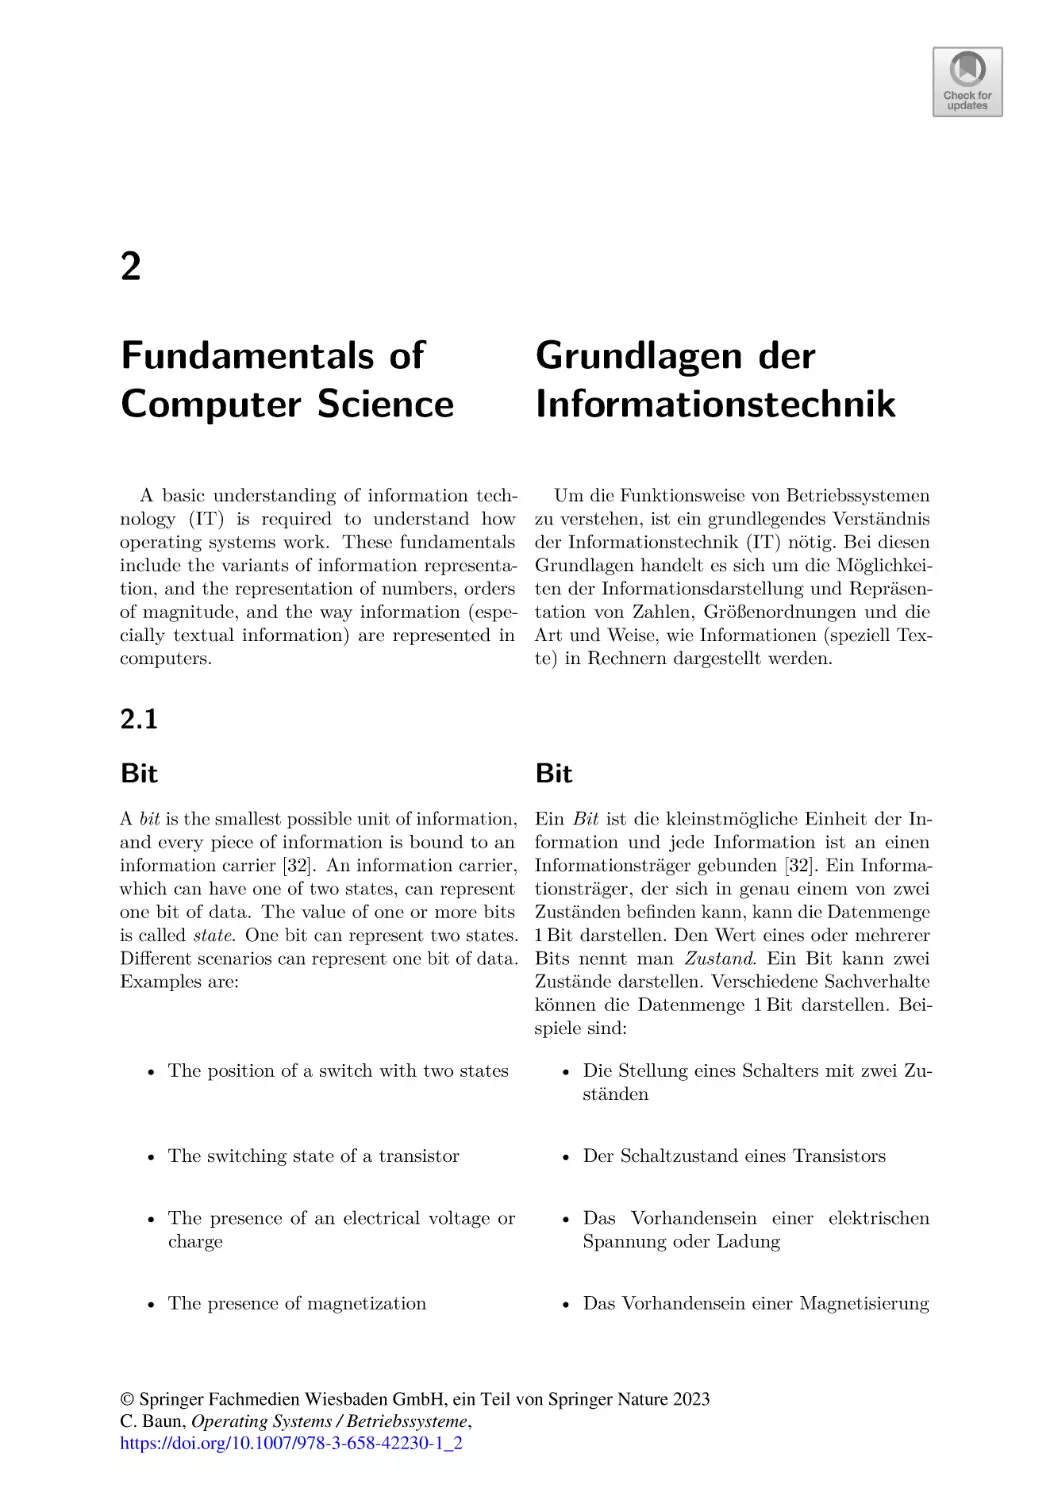 2
Fundamentals of Computer Science
2.1
Bit